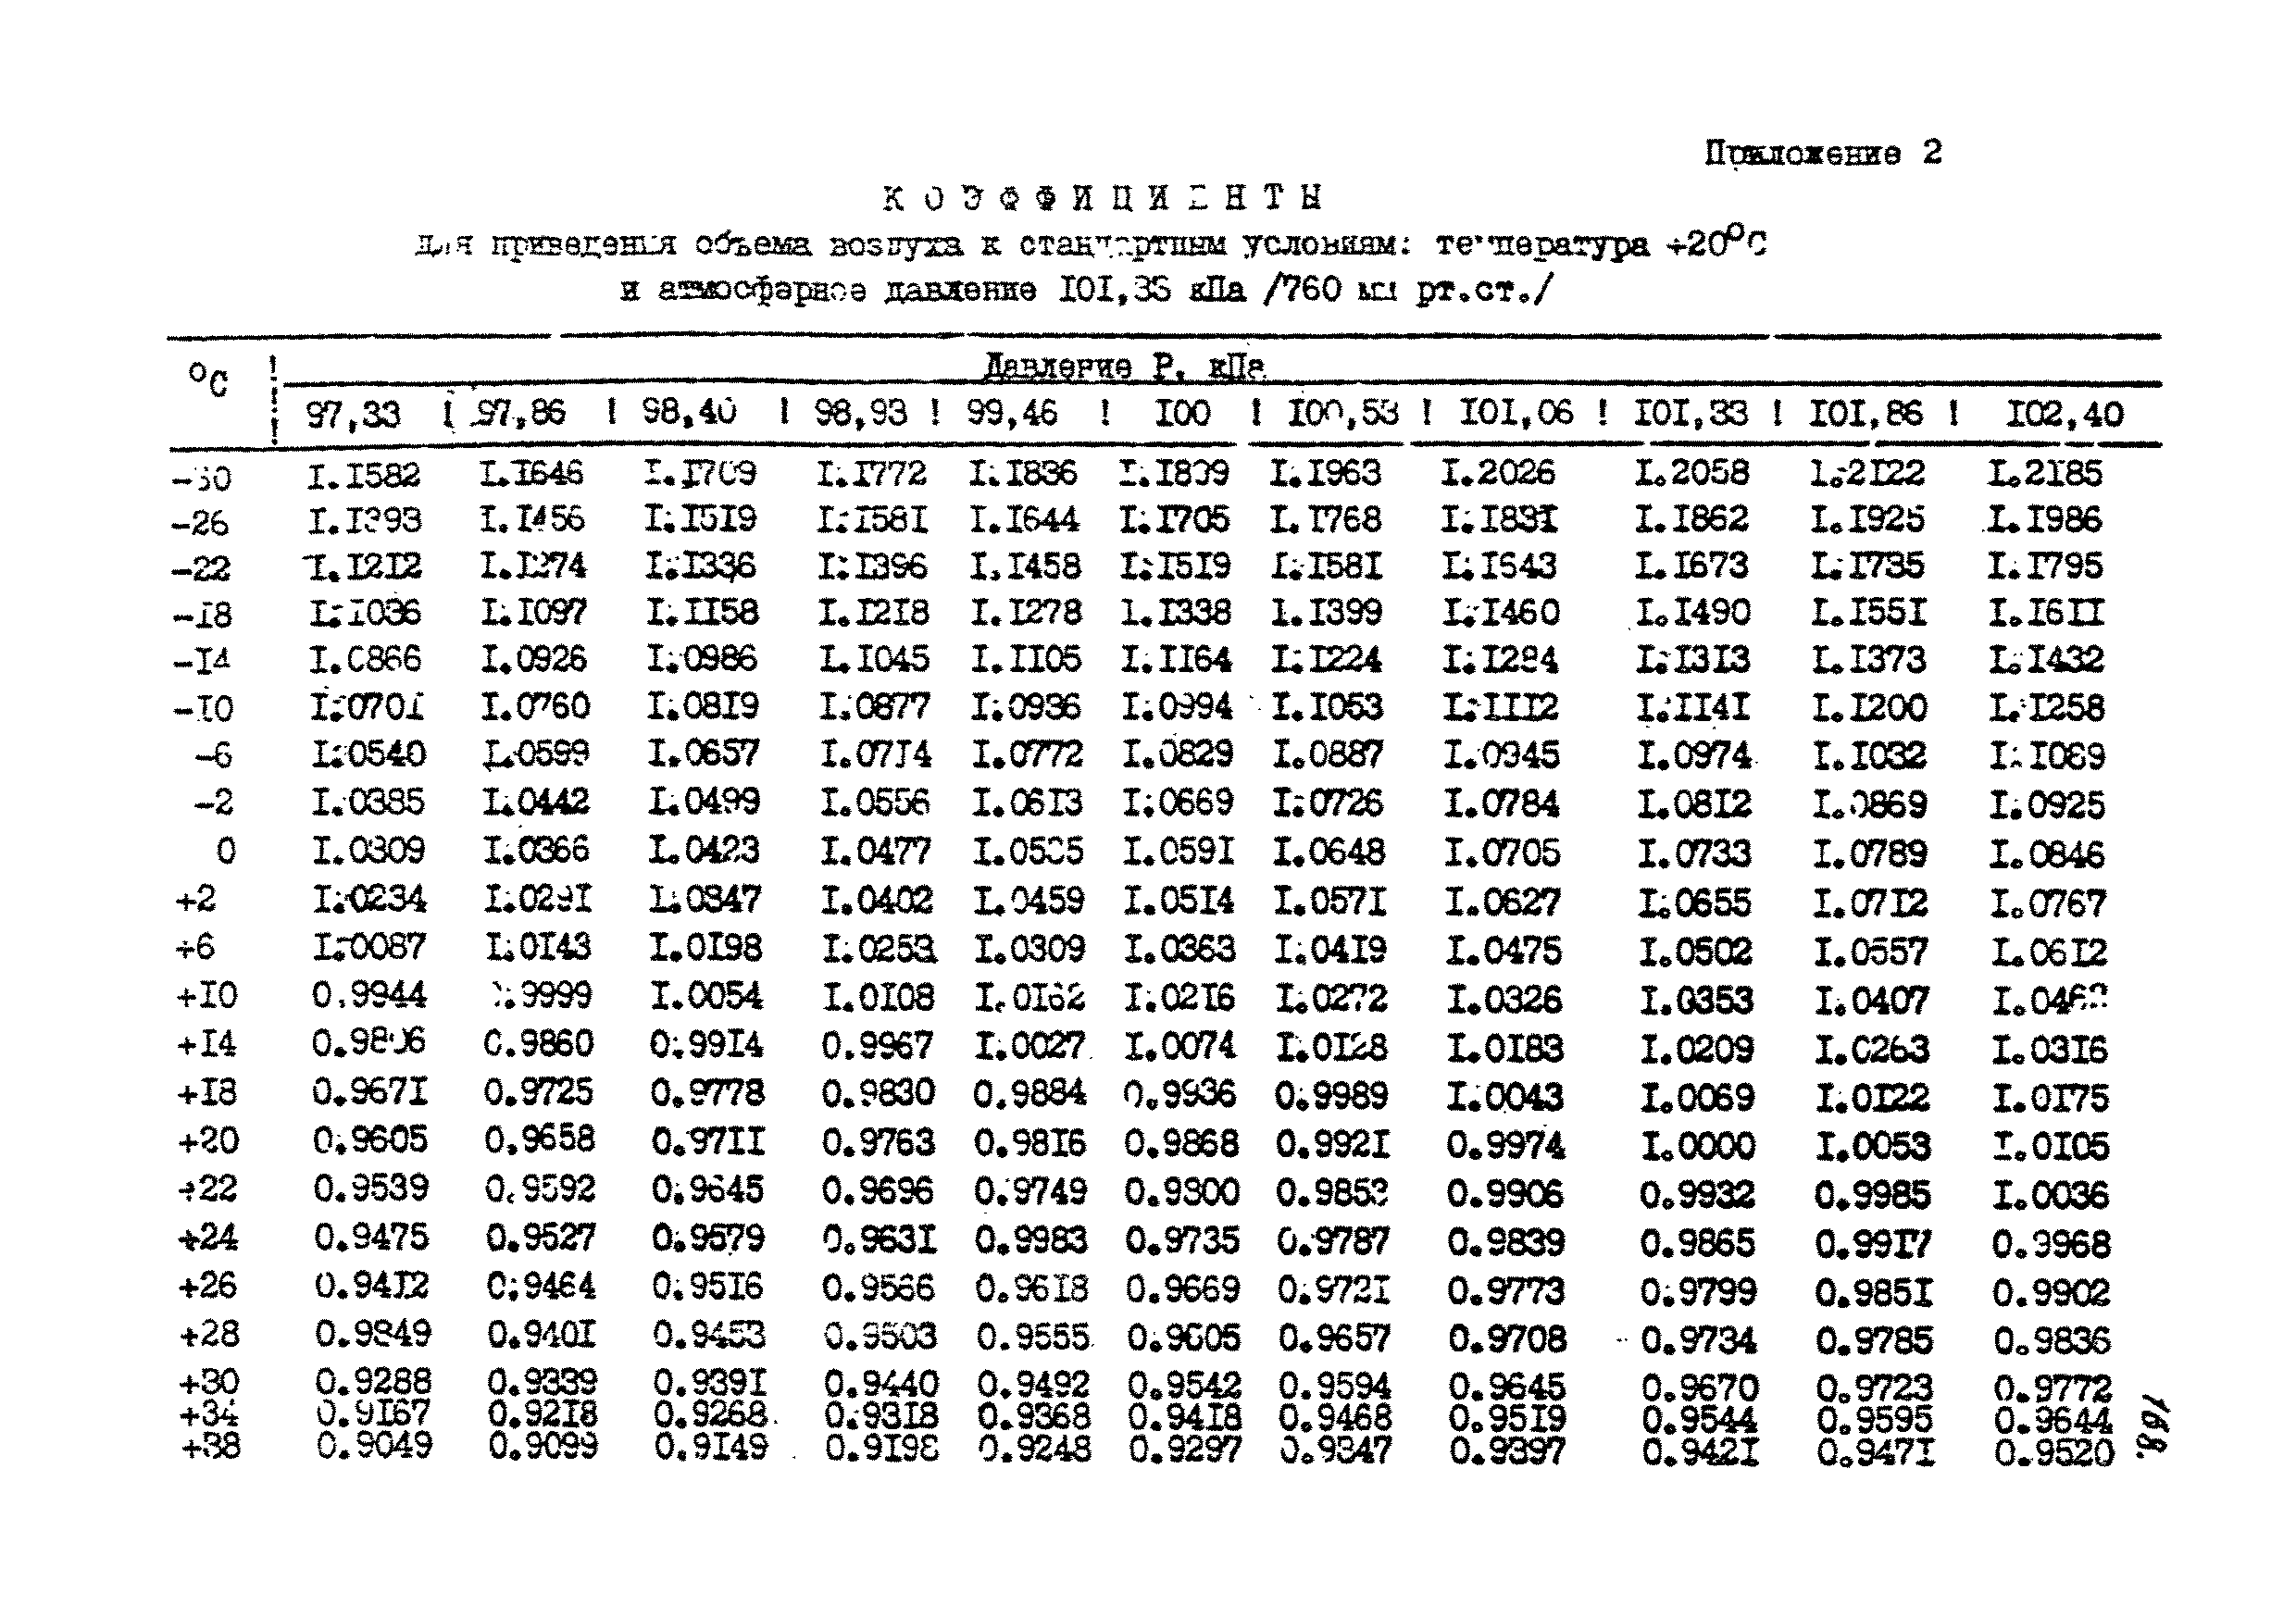 МУ 2746-83